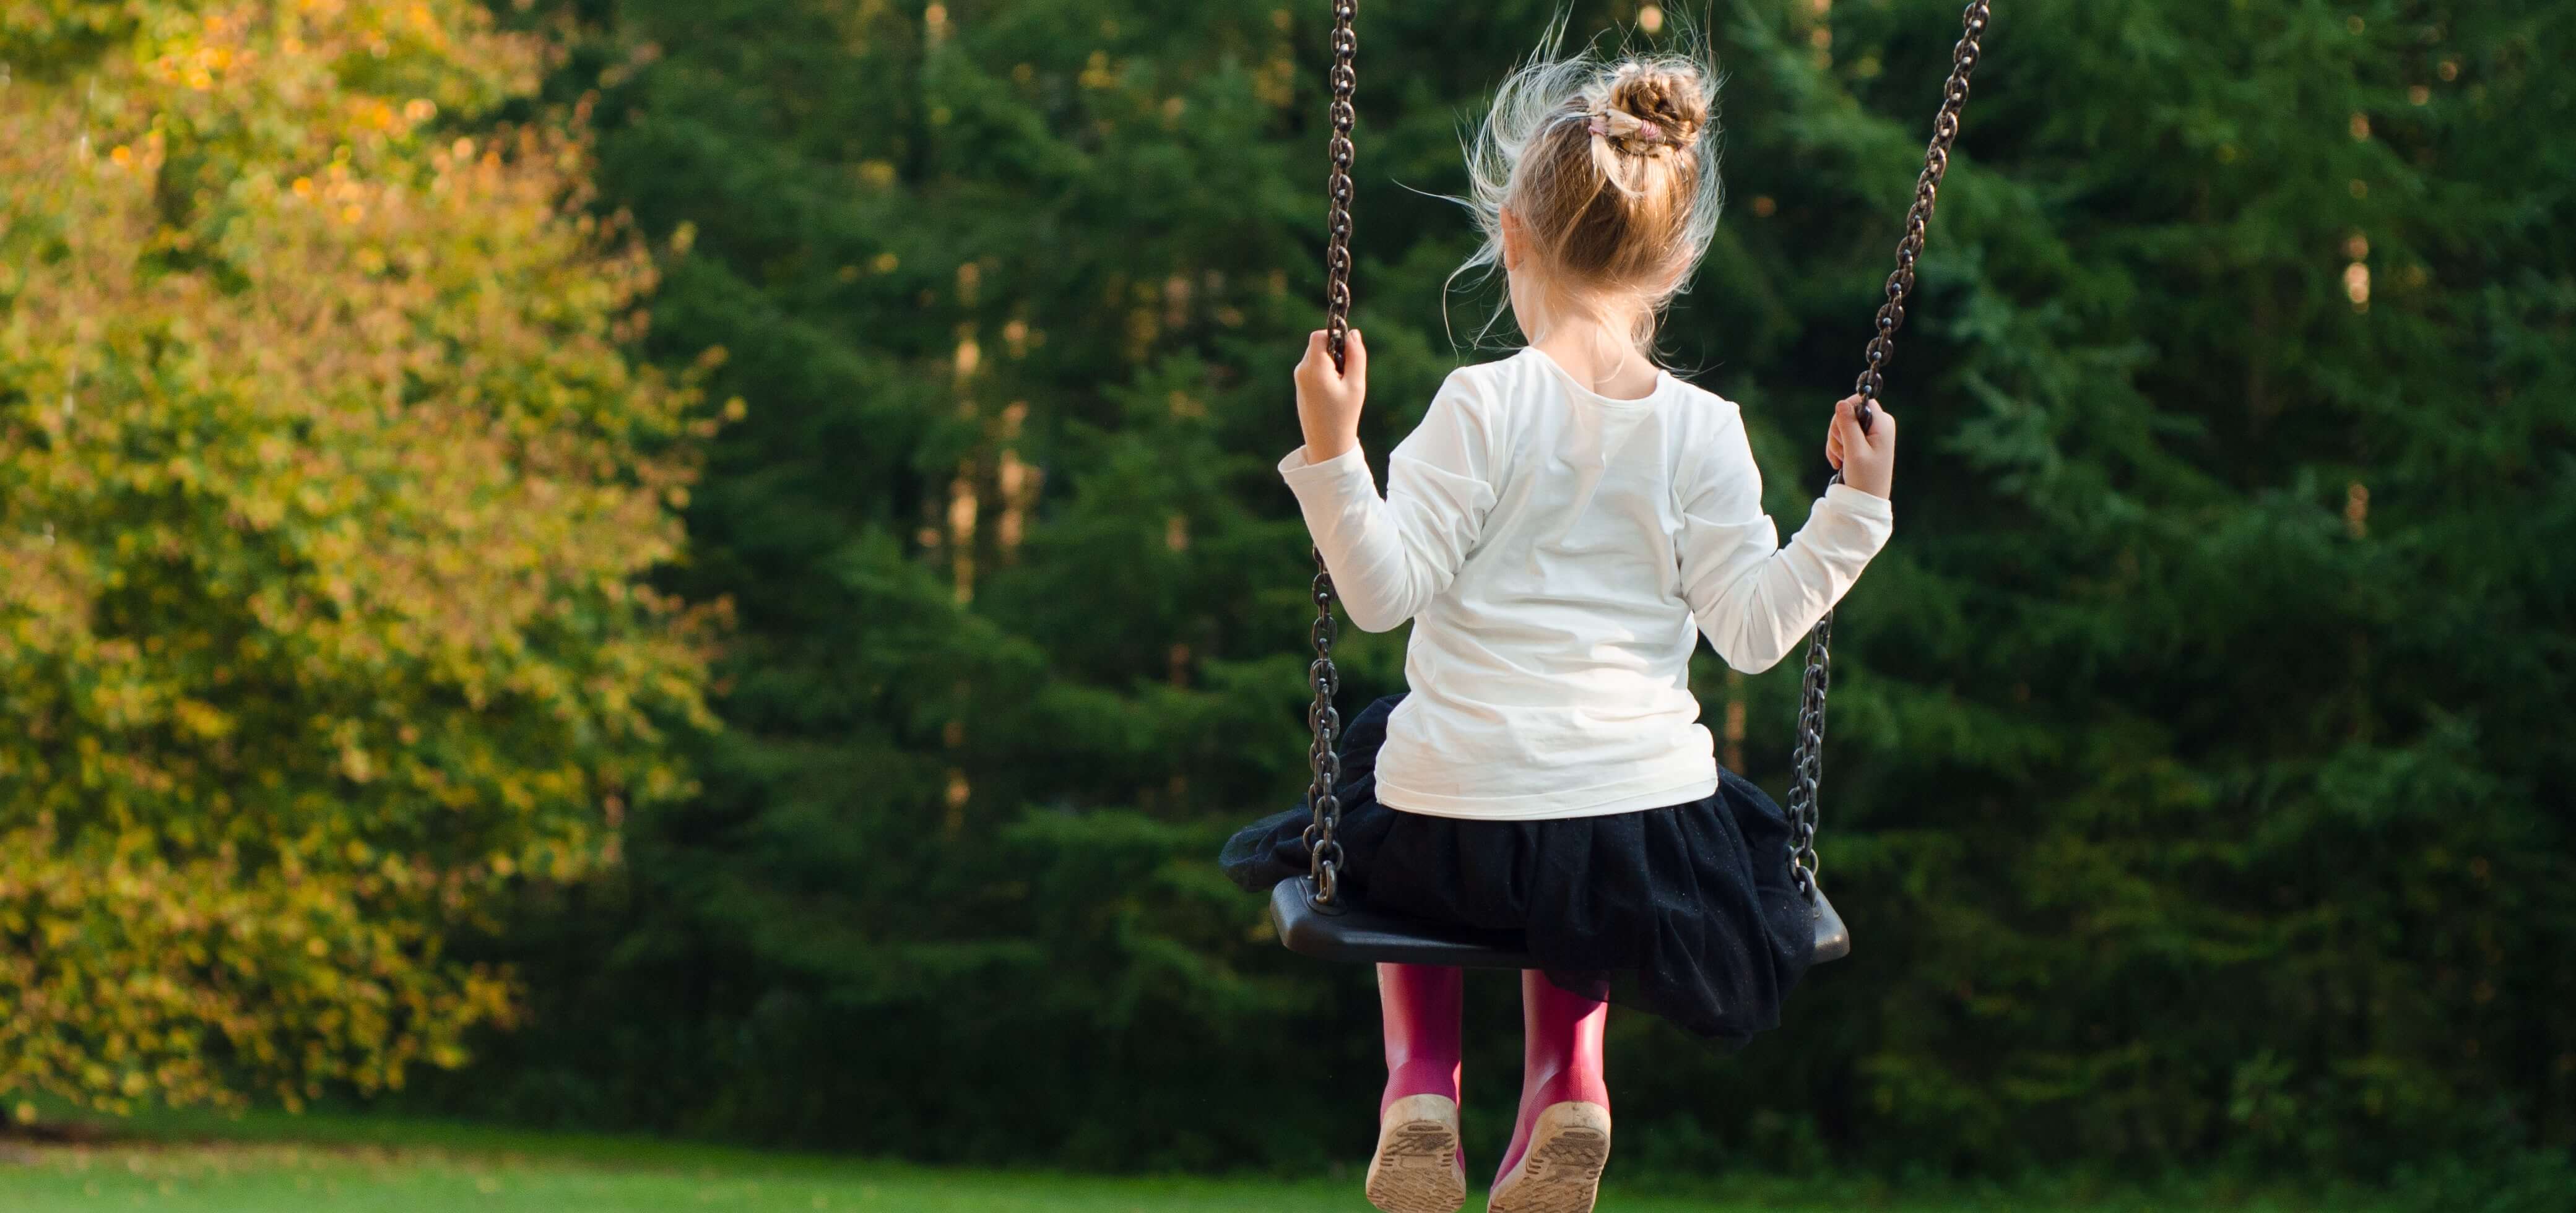 Girl on Swing - Playground Injuries